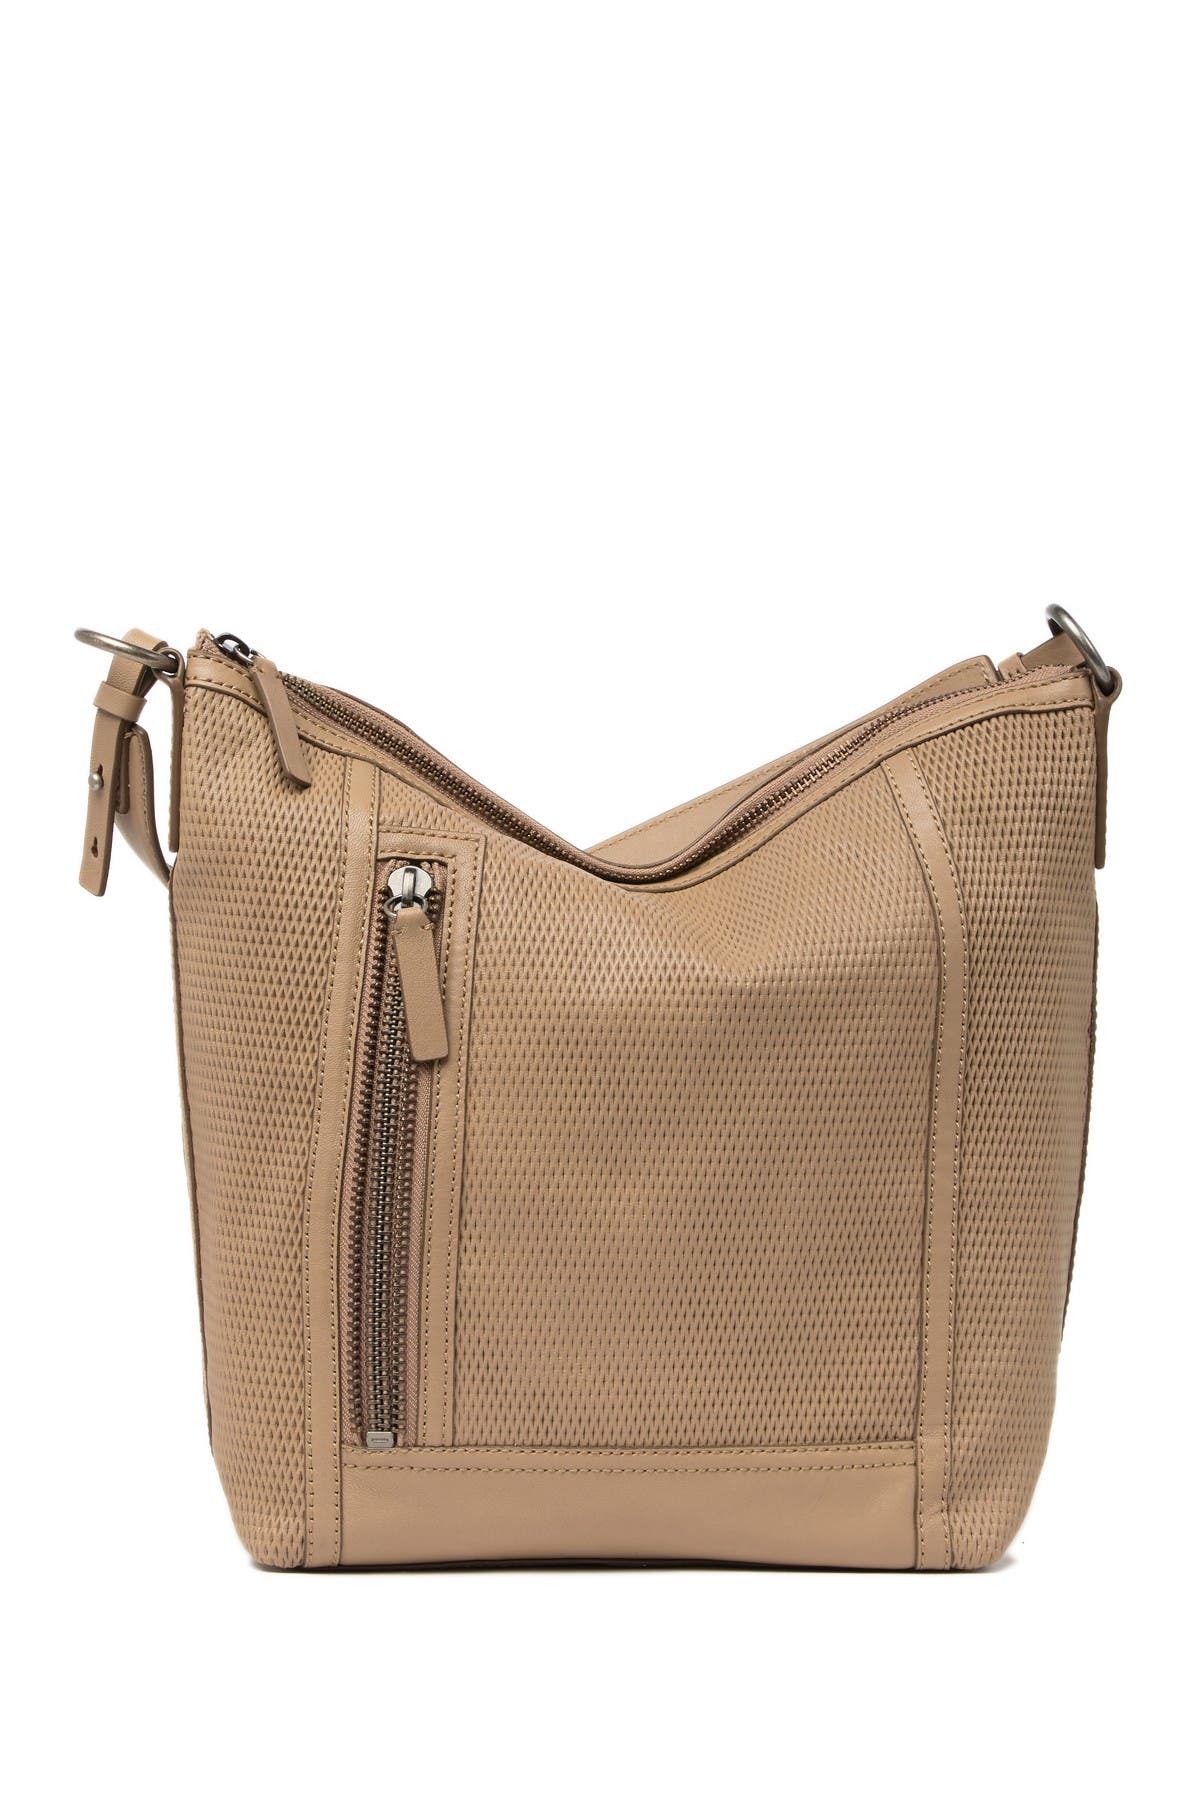 Frye | Lena Leather Perforated Hobo Bag 